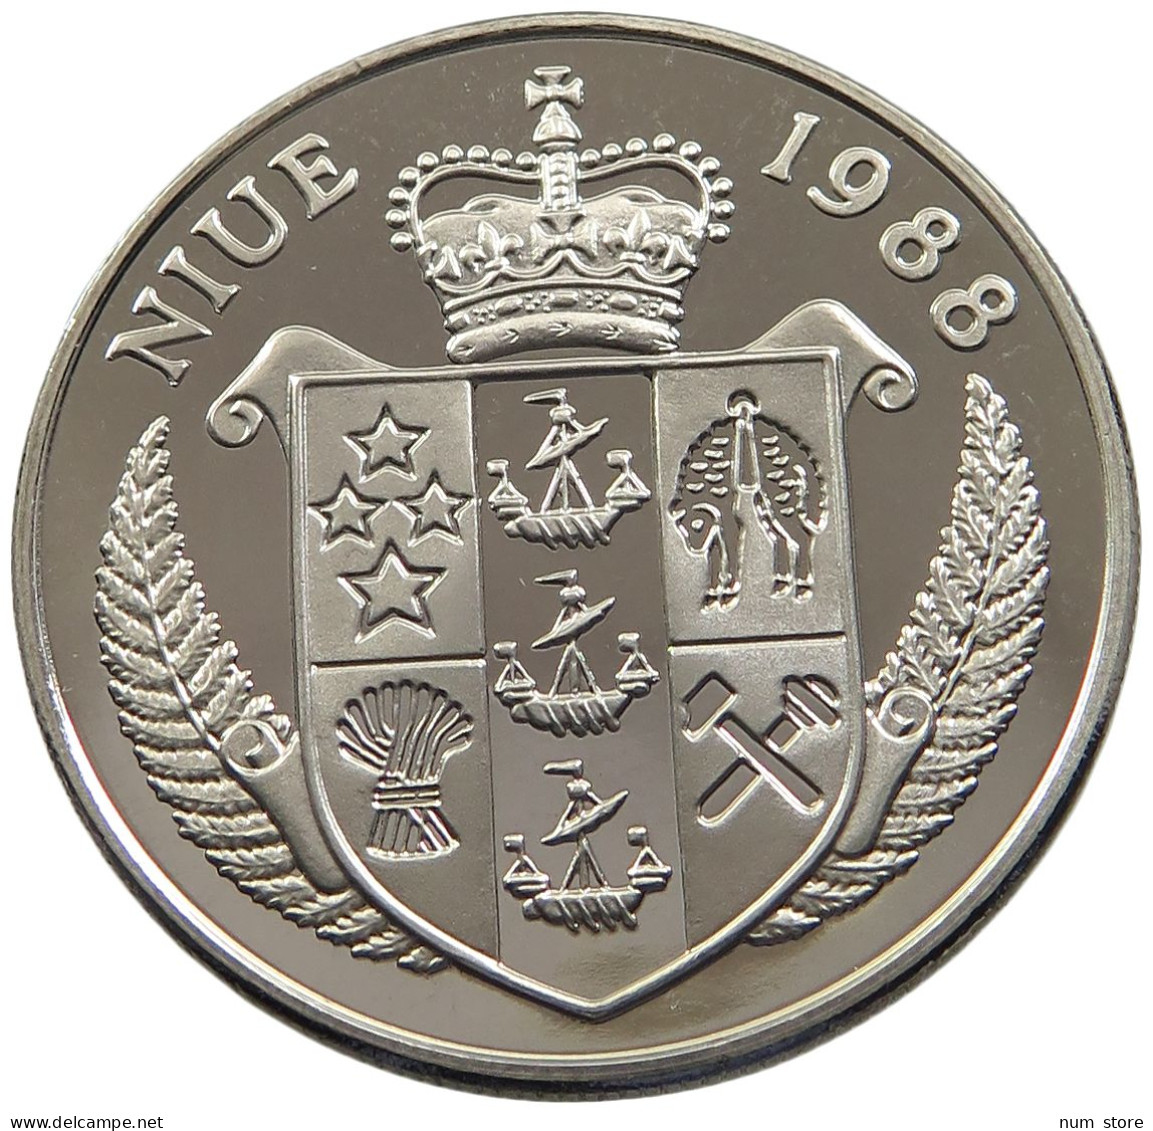 NIUE 5 DOLLARS 1988 KENNEDY UNC #sm14 0905 - Niue